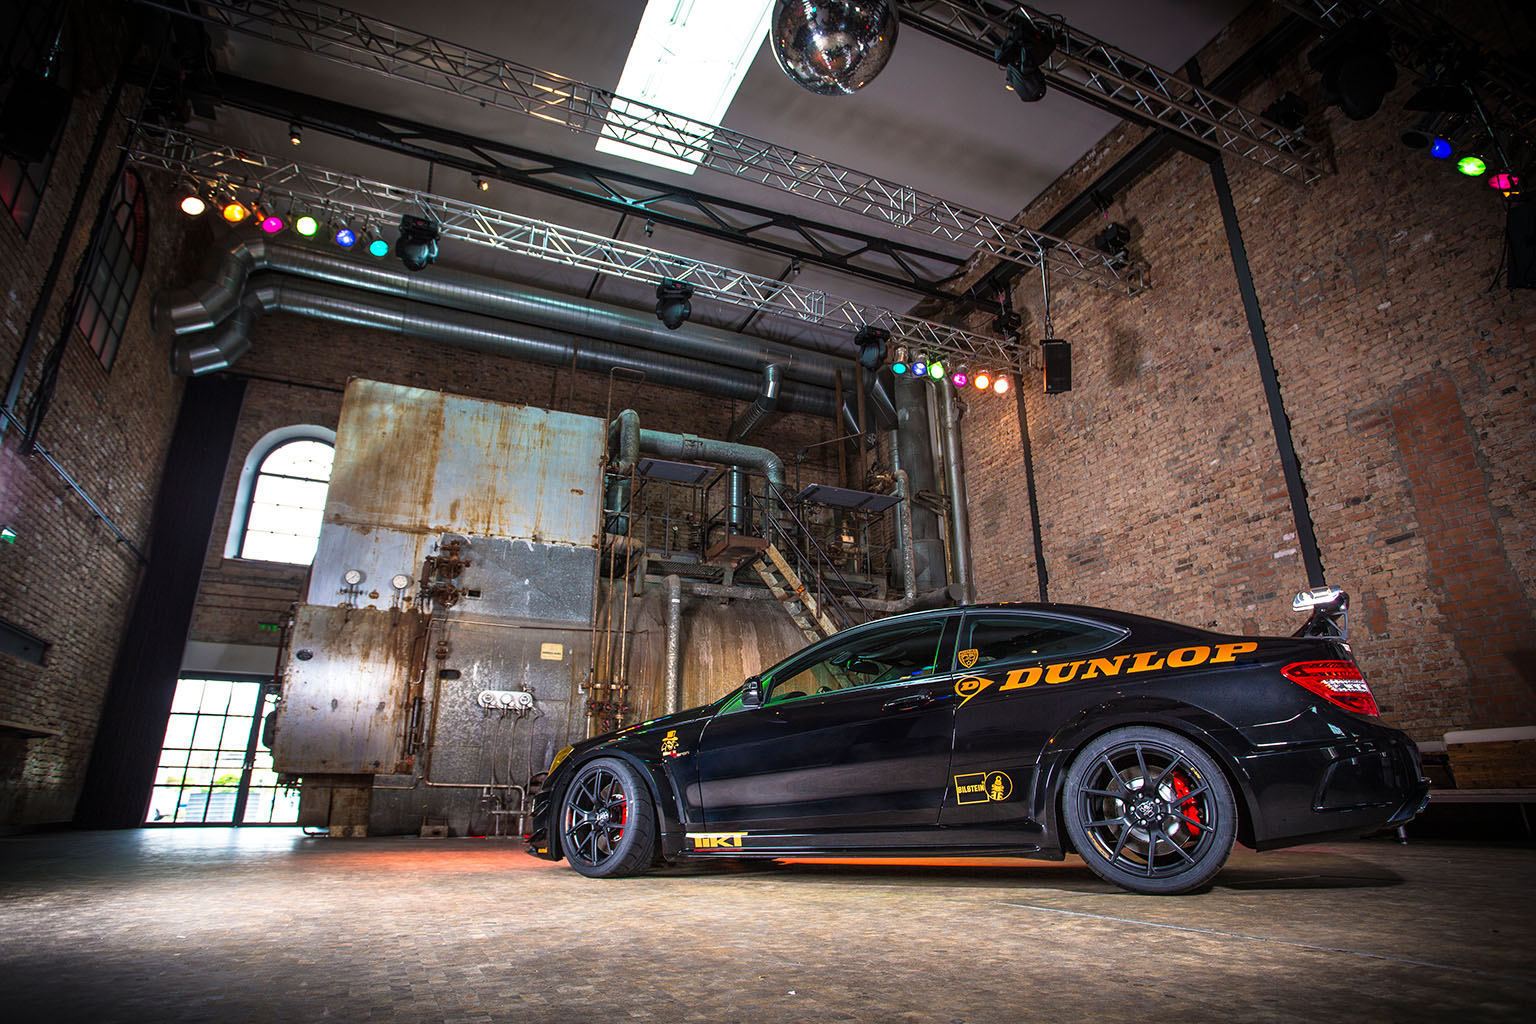 Dunlop Shooting, Mercedes Benz C63 AMG Black Baron, Stephanskirchen 2013 - Foto: Tim Upietz